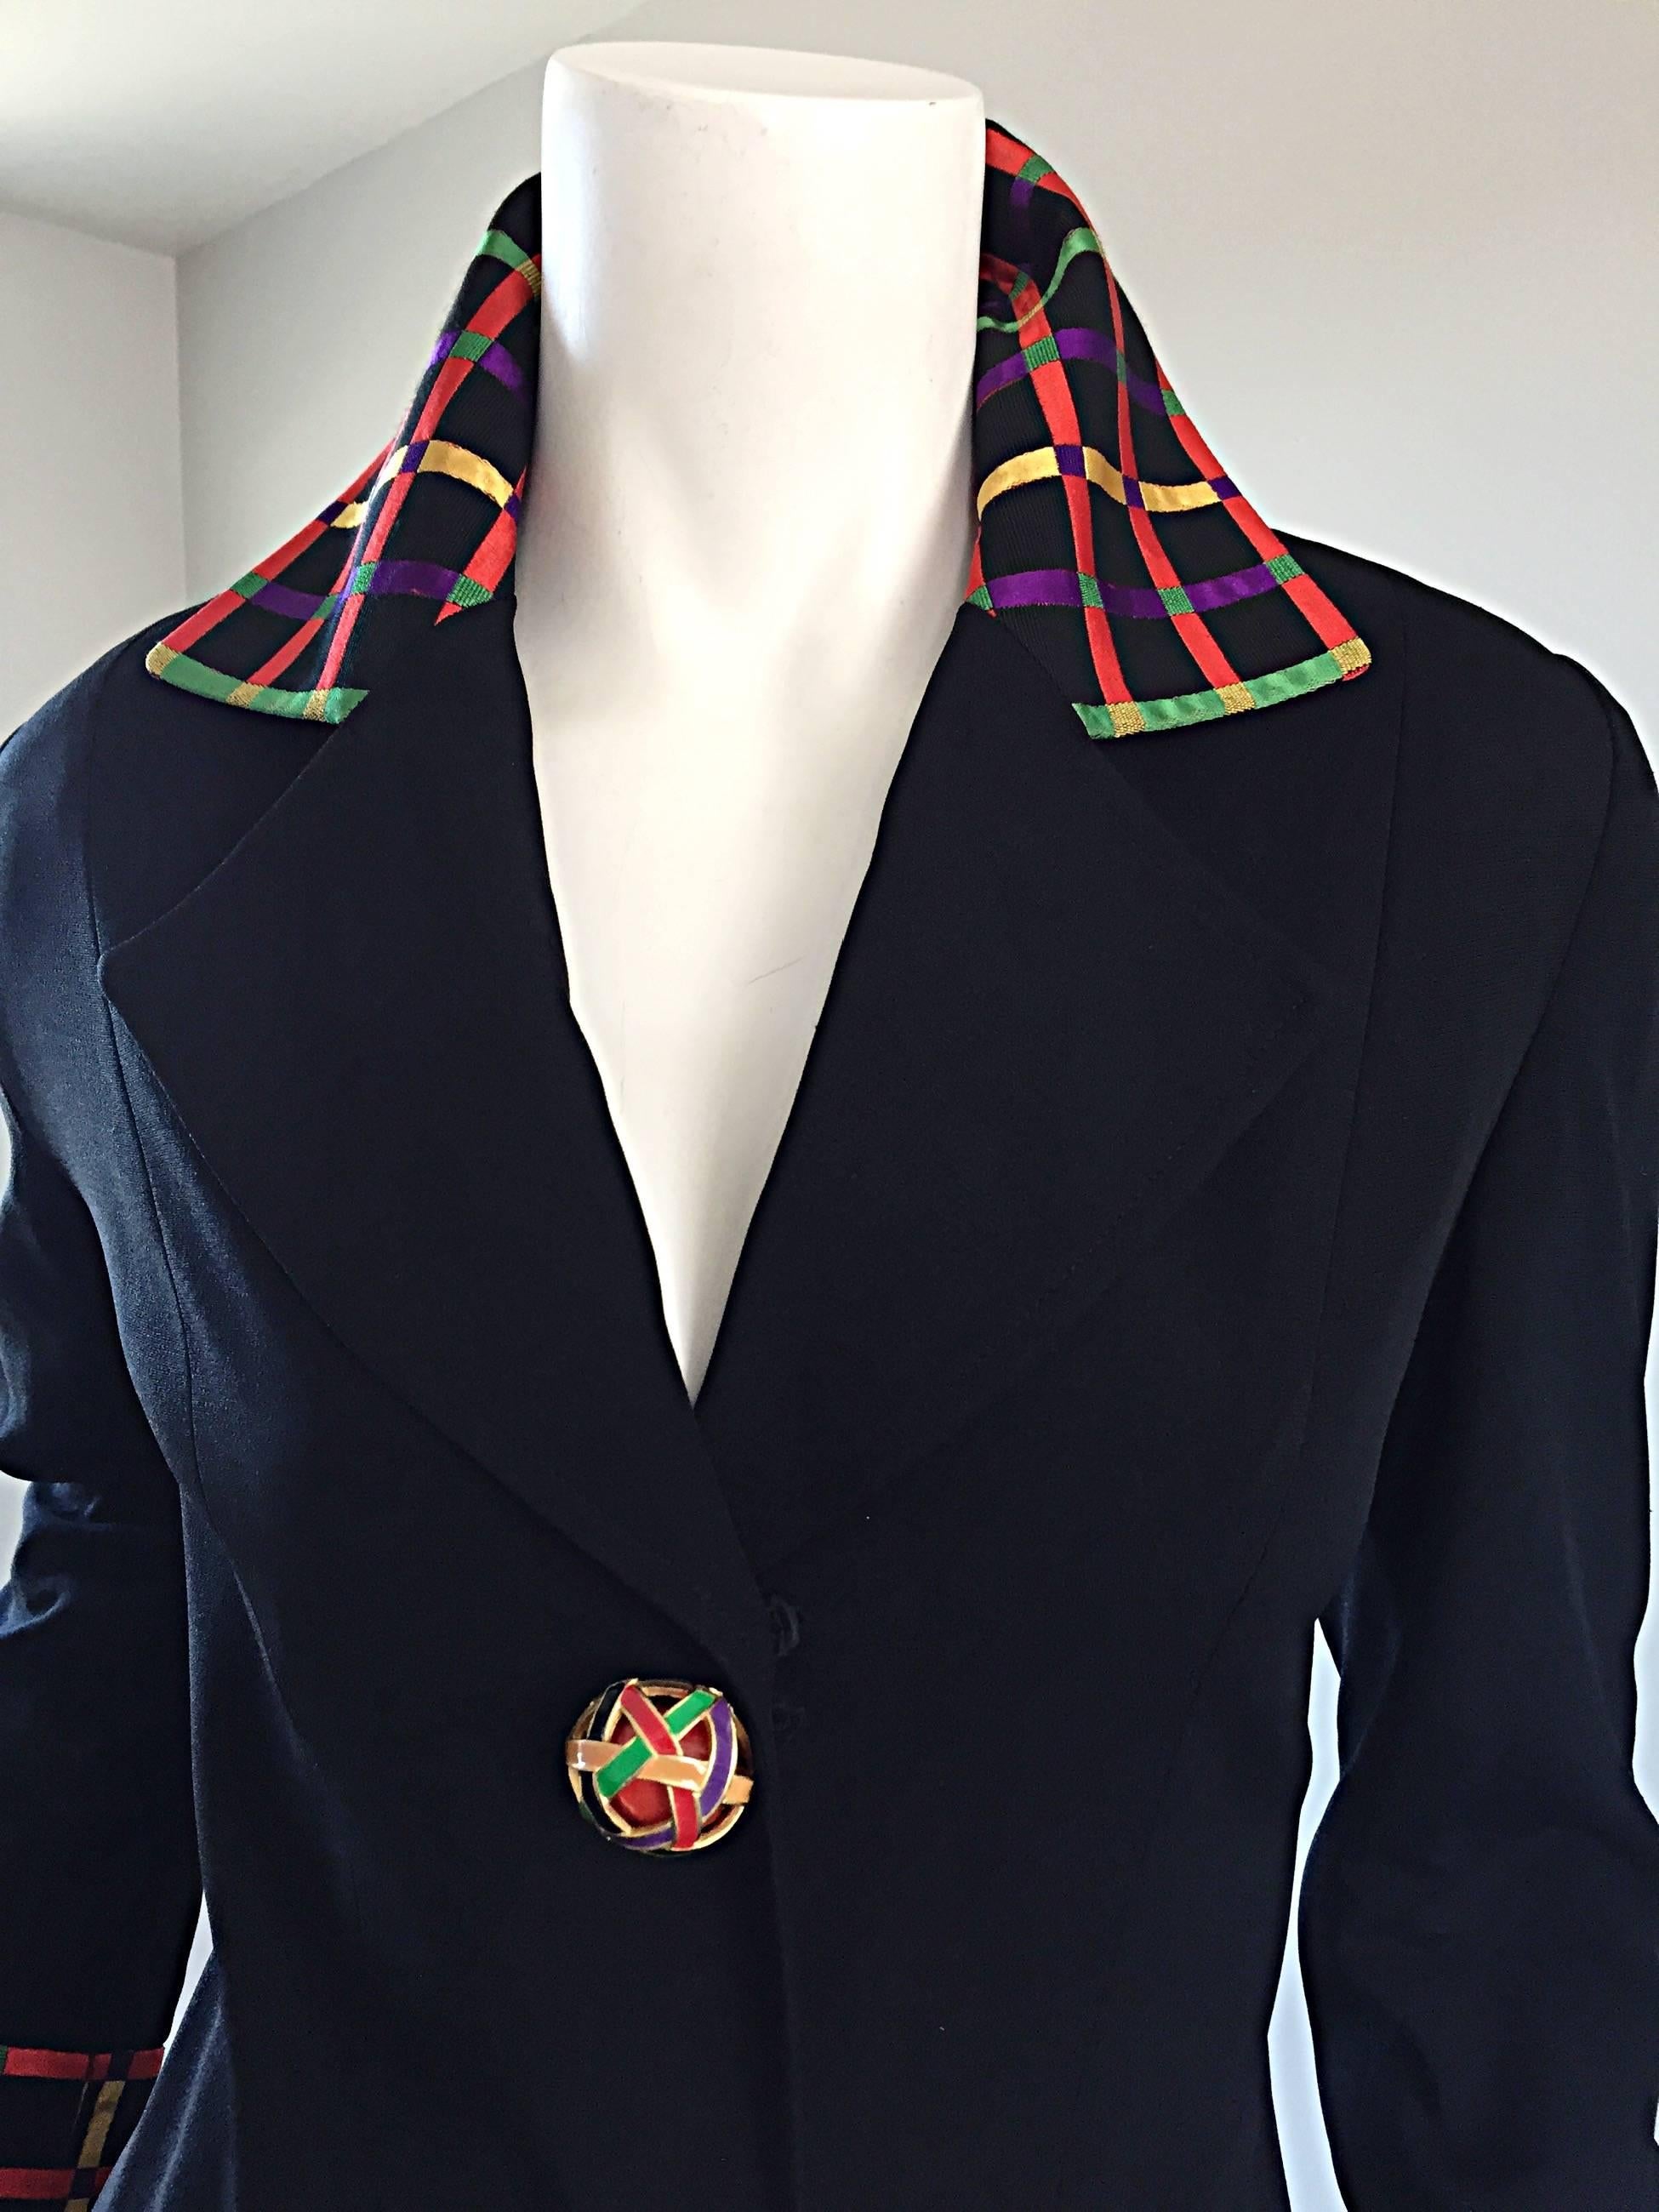 Vintage Kathryn Dianos Black Jacket Dress w/ Plaid Details + Dome Buttons 4